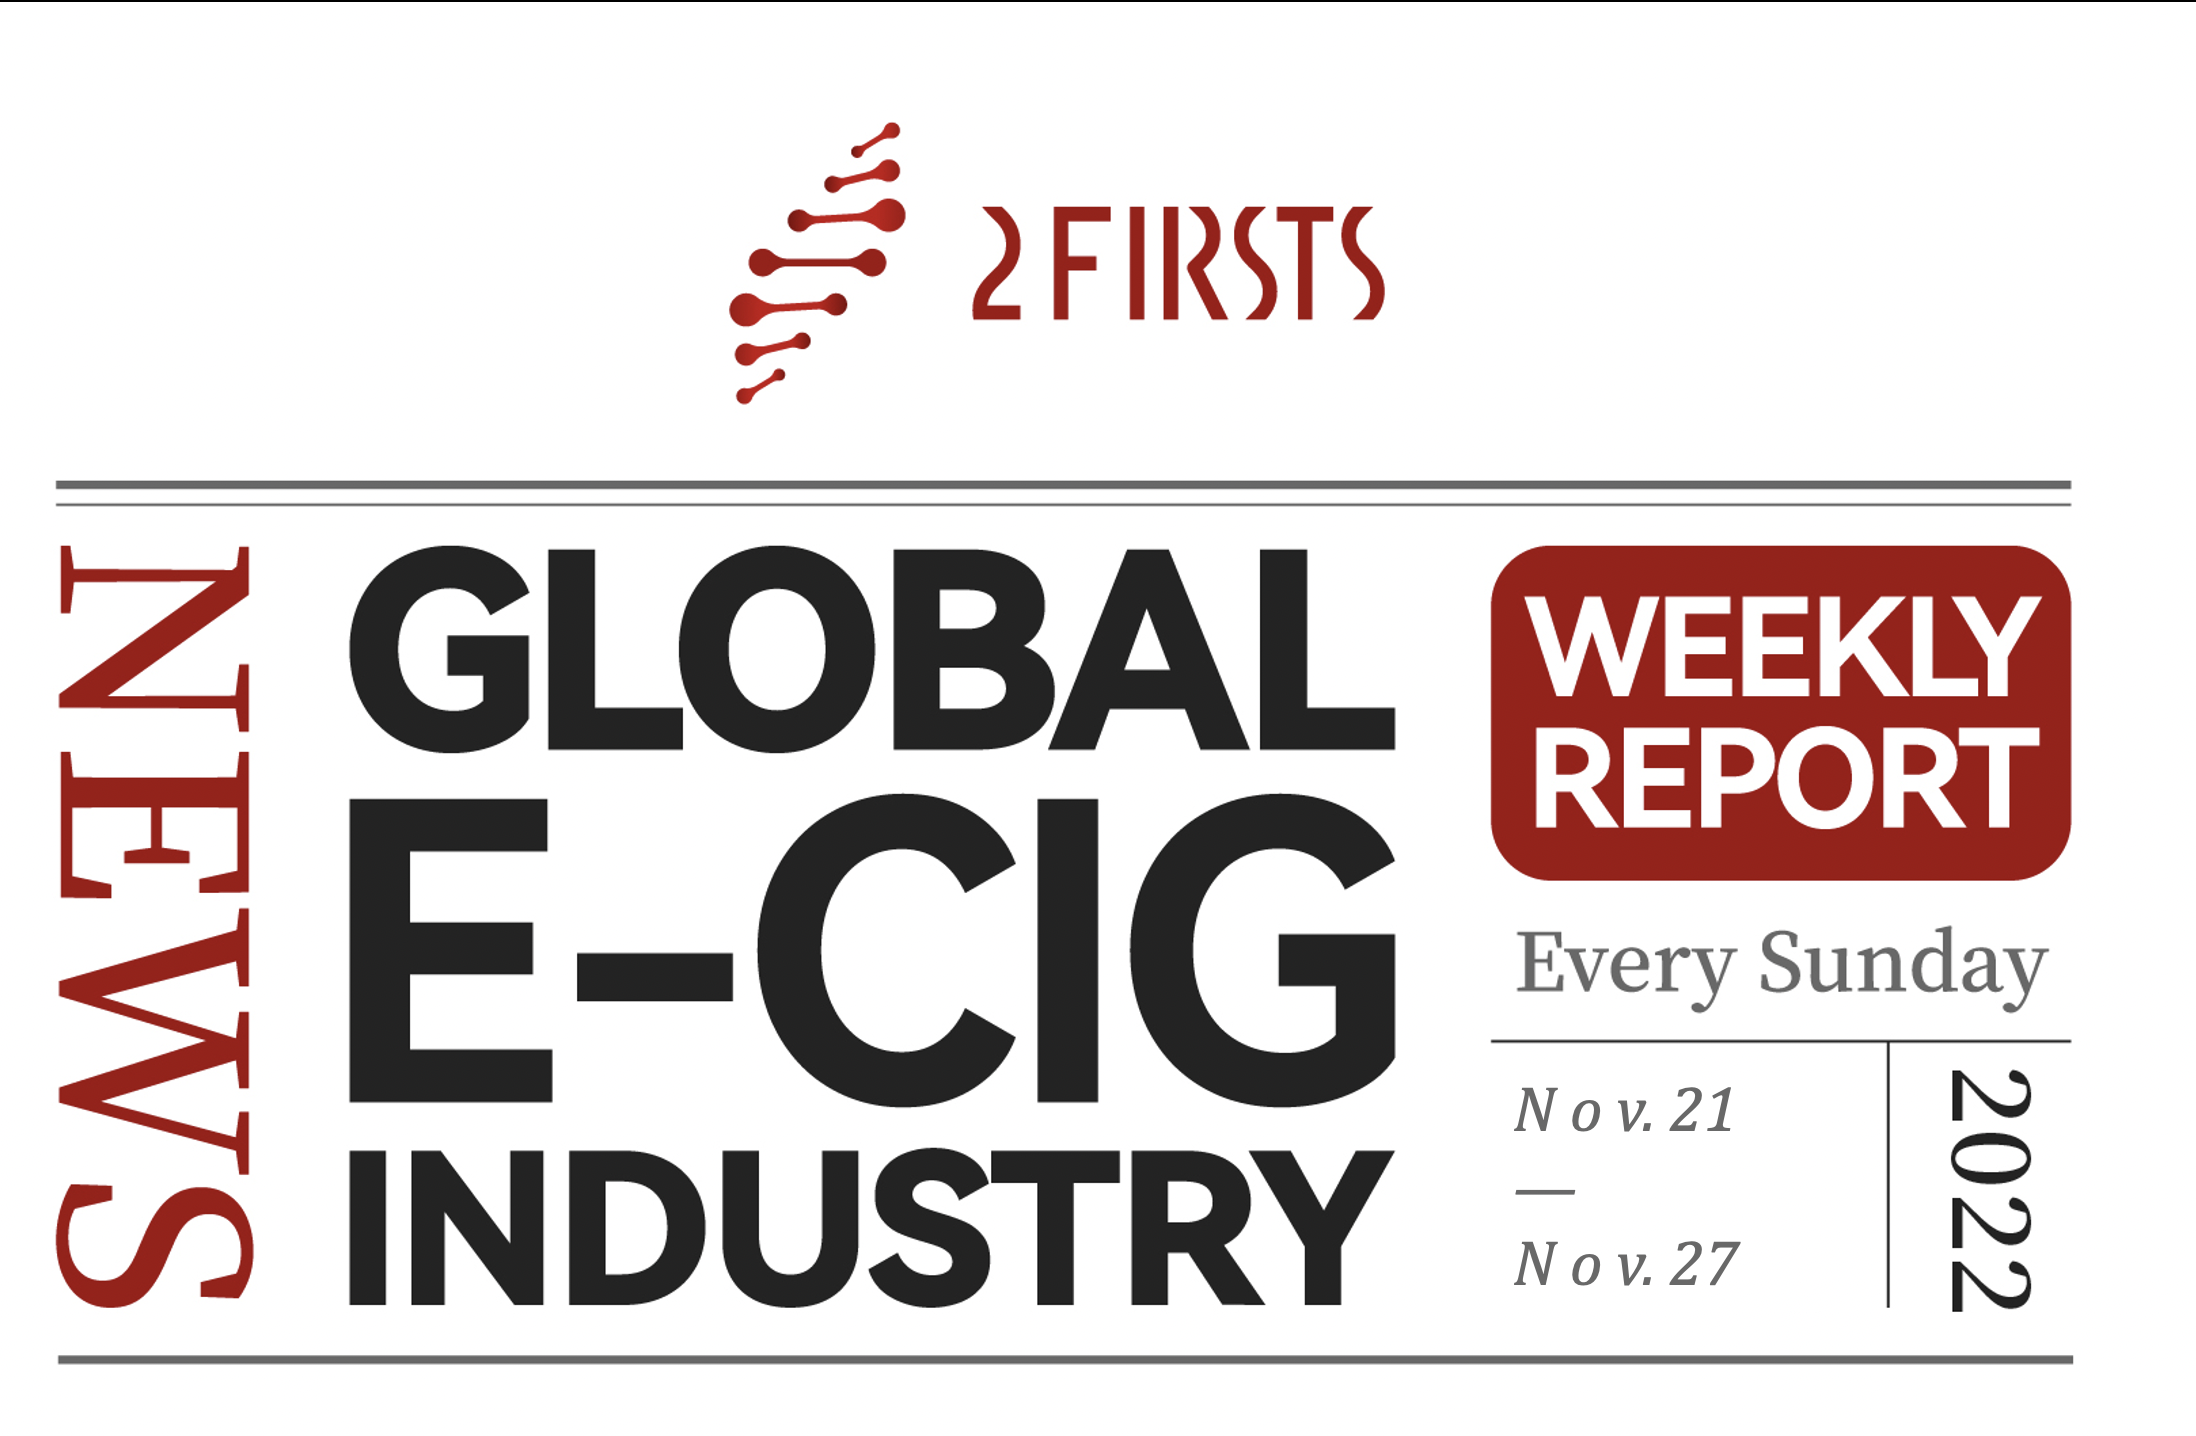 Global E-cigarette Industry Weekly (Nov. 21-27)